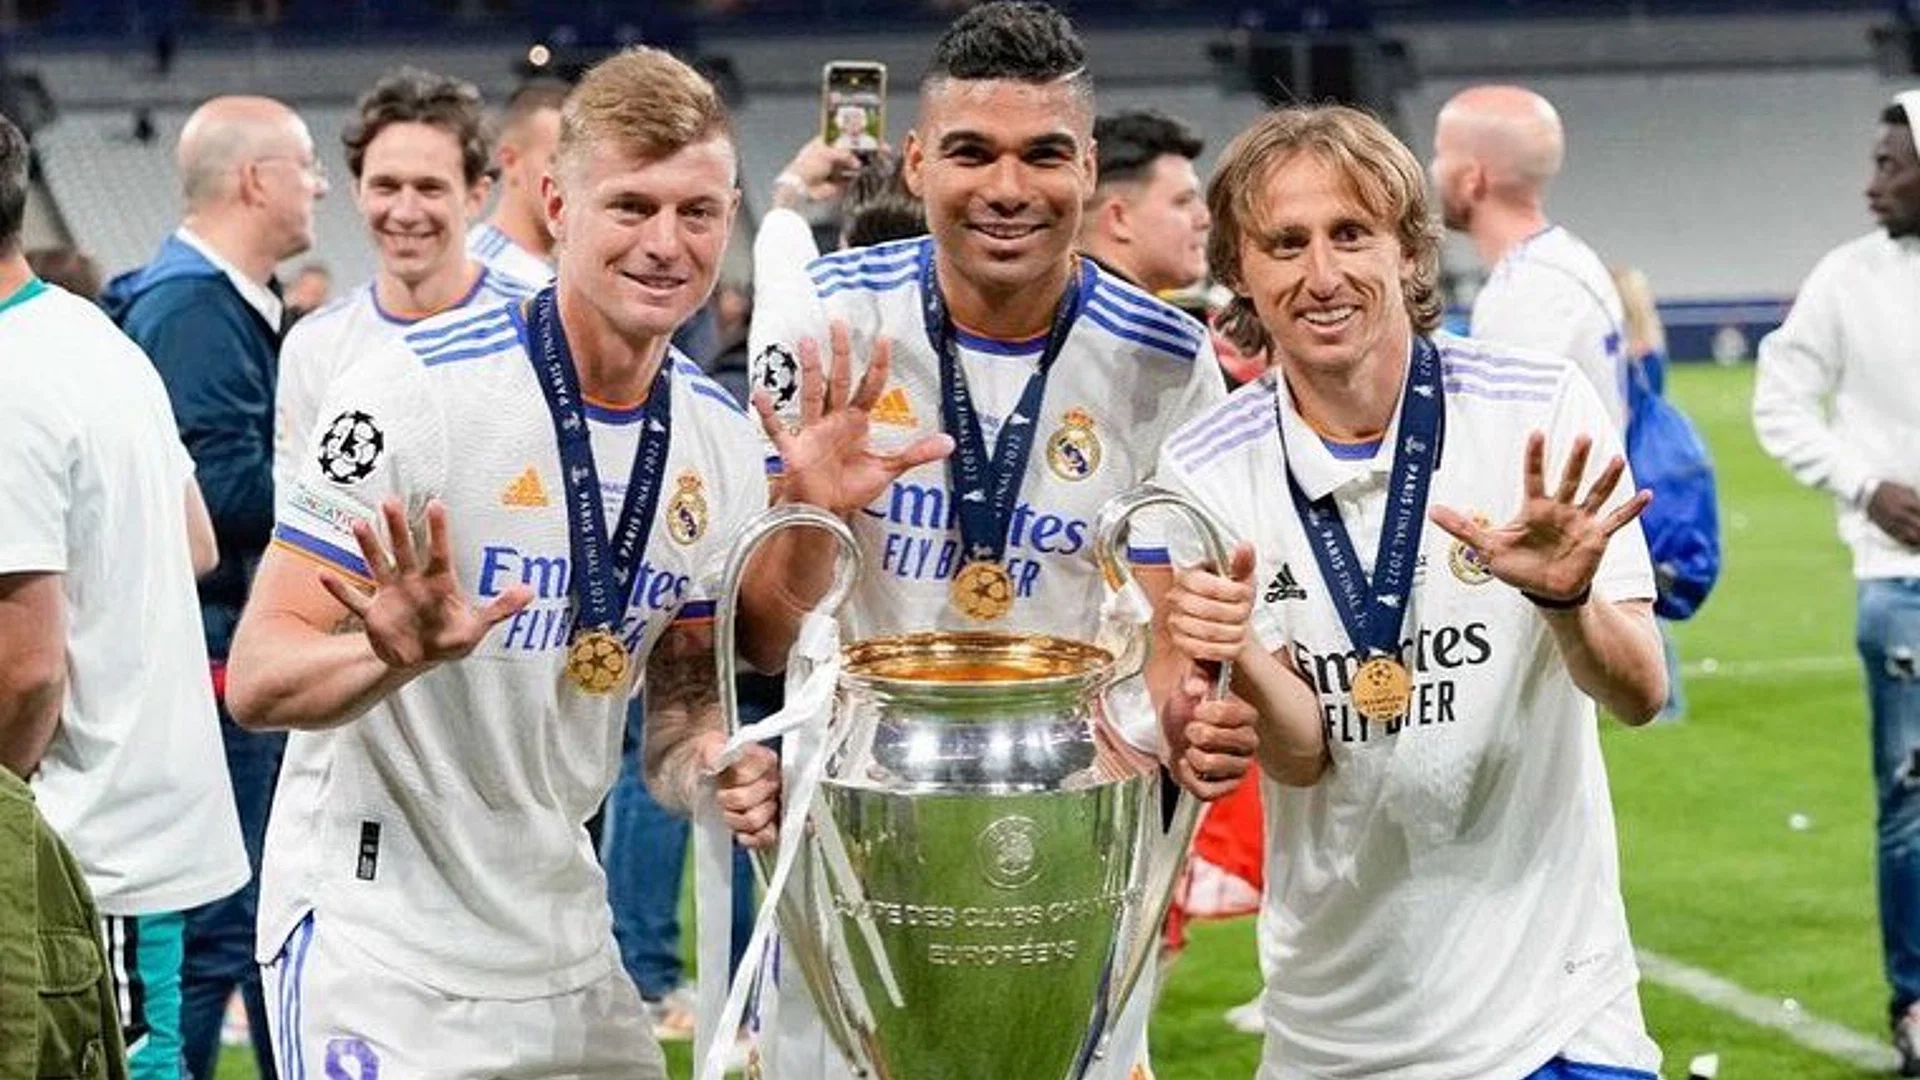 Toni Kroos, Luka Modric et Casemiro sous le maillot du Real Madrid